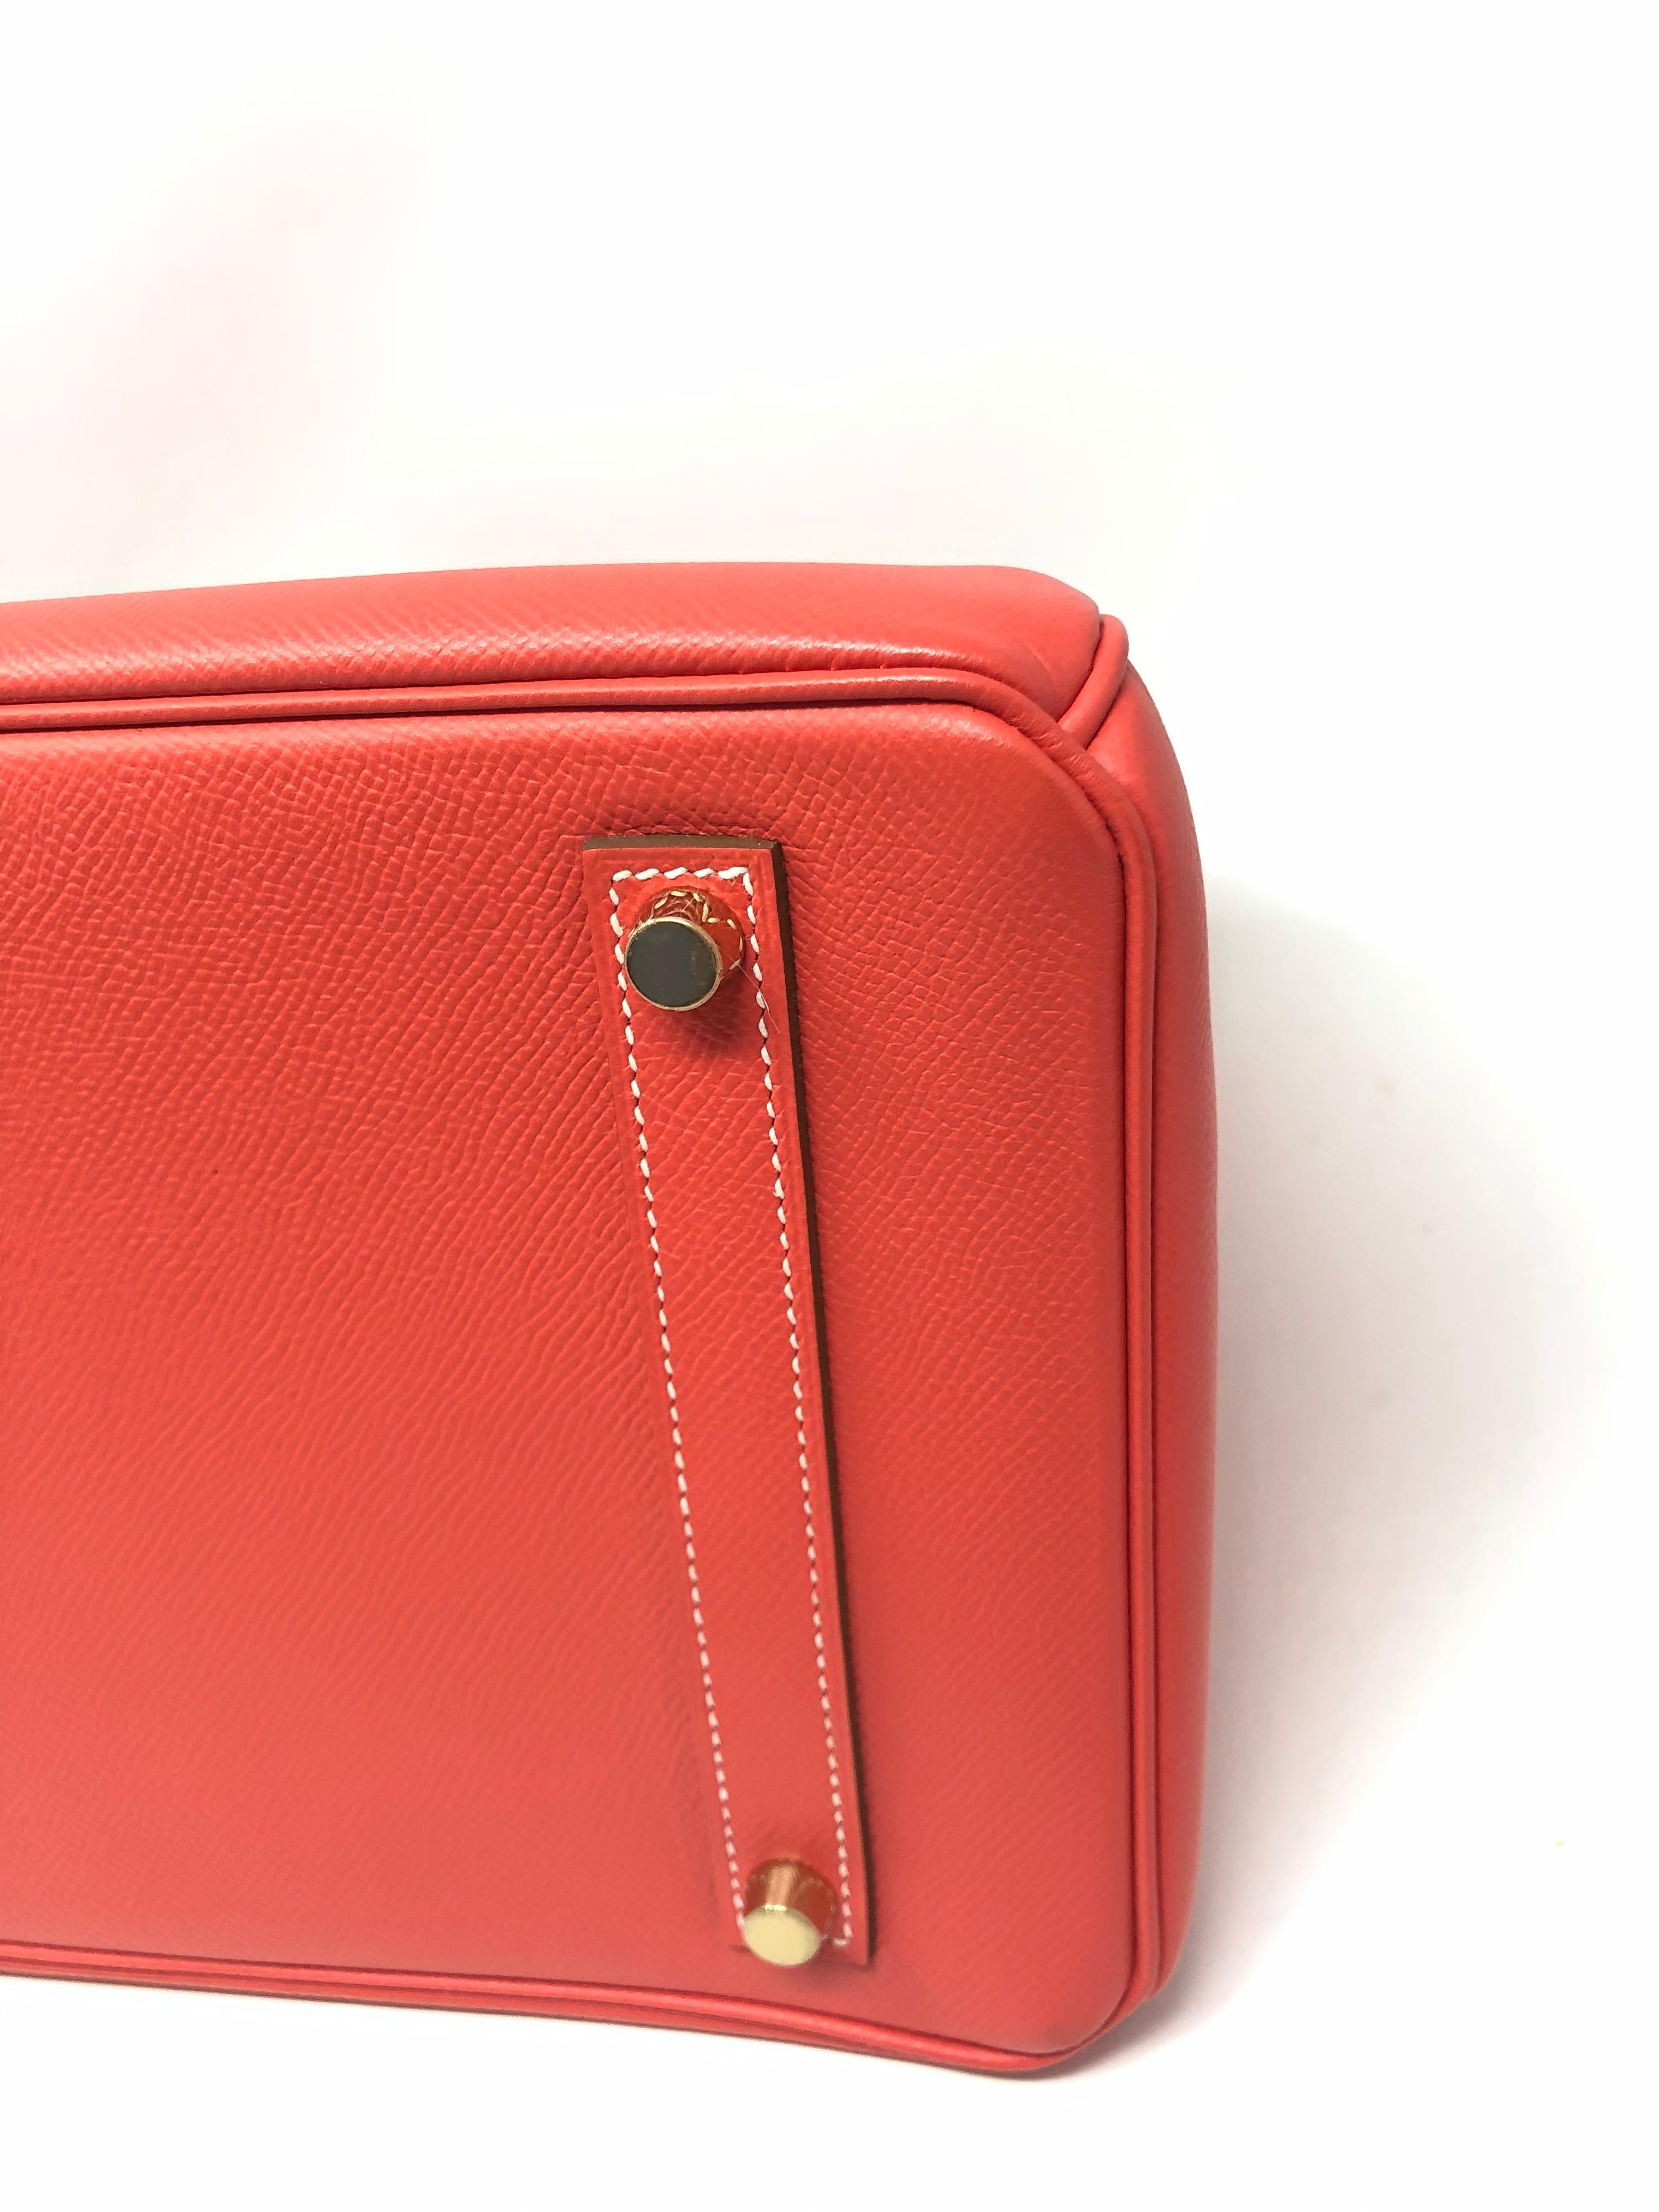 Hermès Birkin Epsom Leather Candy Rose Jaipur 35 5